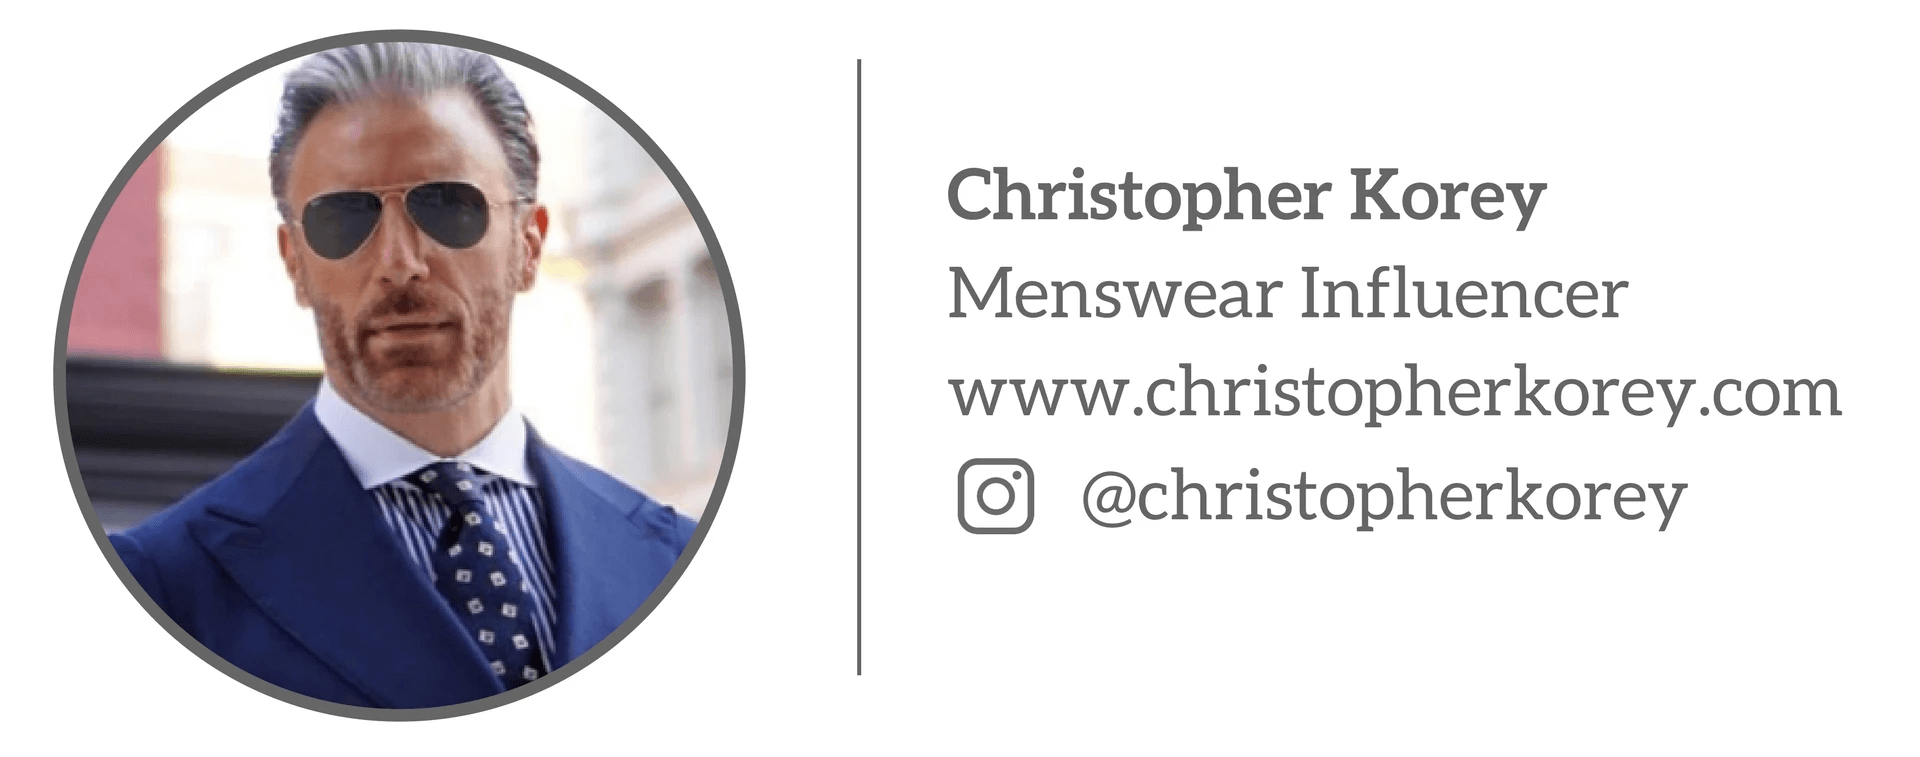 Christopher Korey - Menswear Influencer “Phù hợp là tất cả”